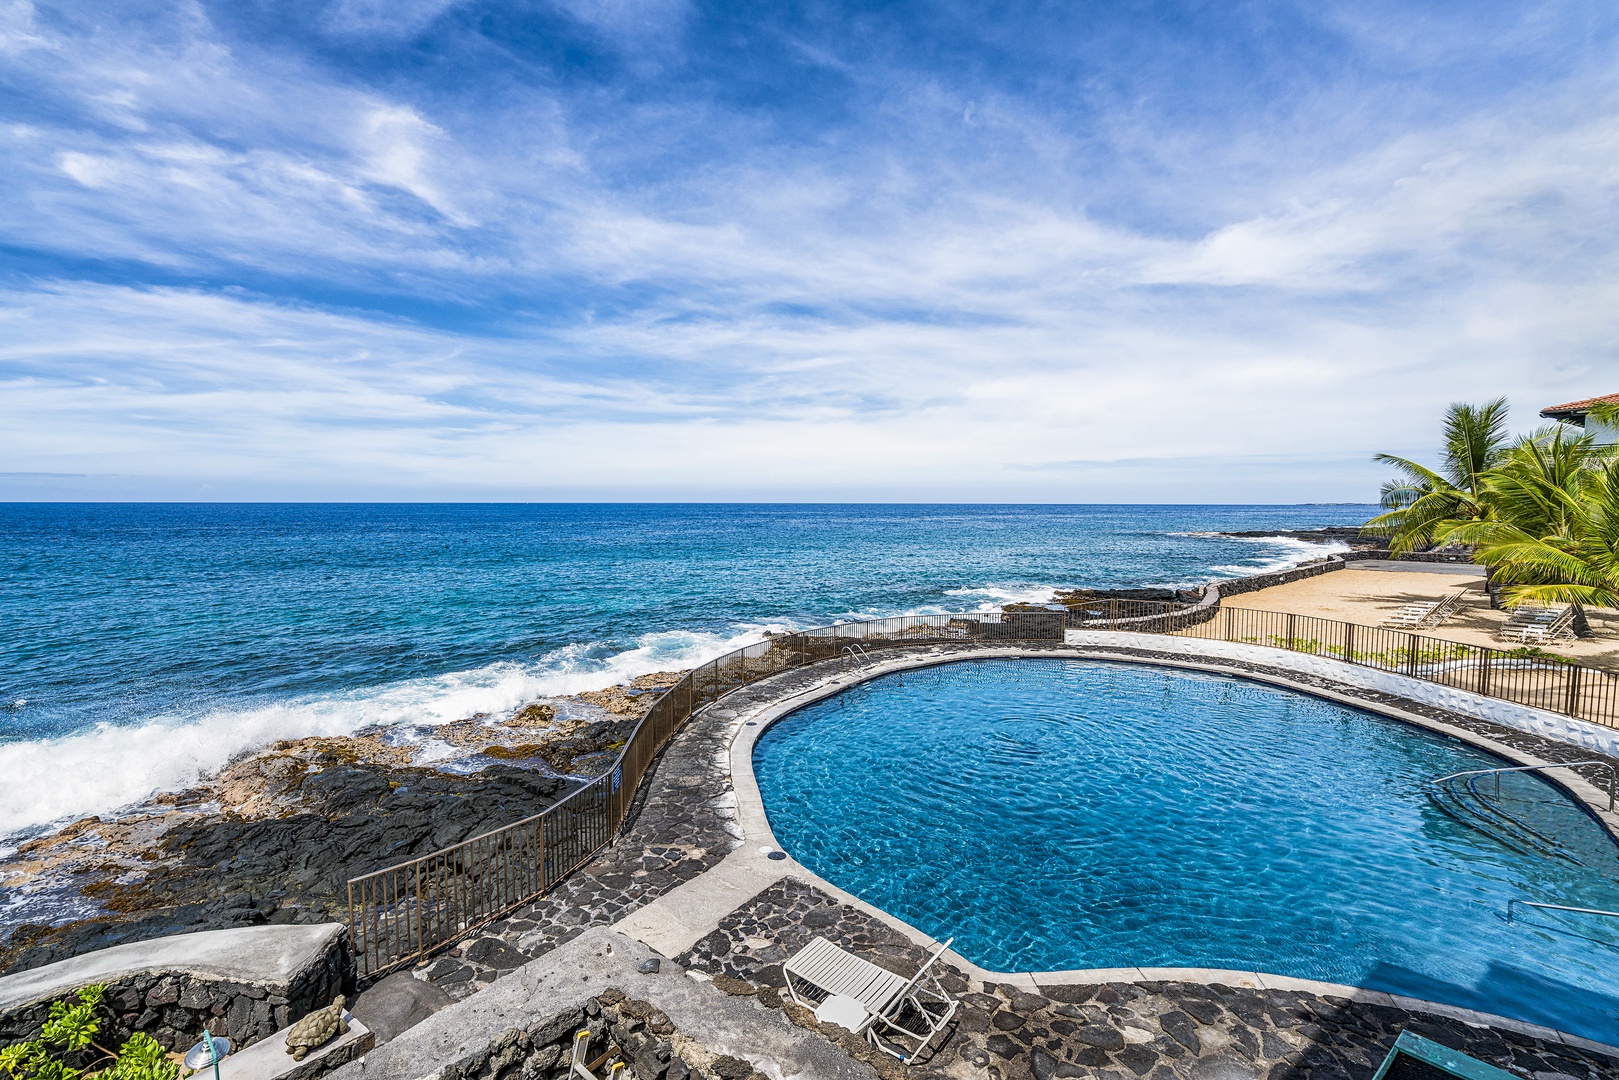 Kailua Kona Vacation Rentals, Casa De Emdeko 104 - Stunning views from the pool